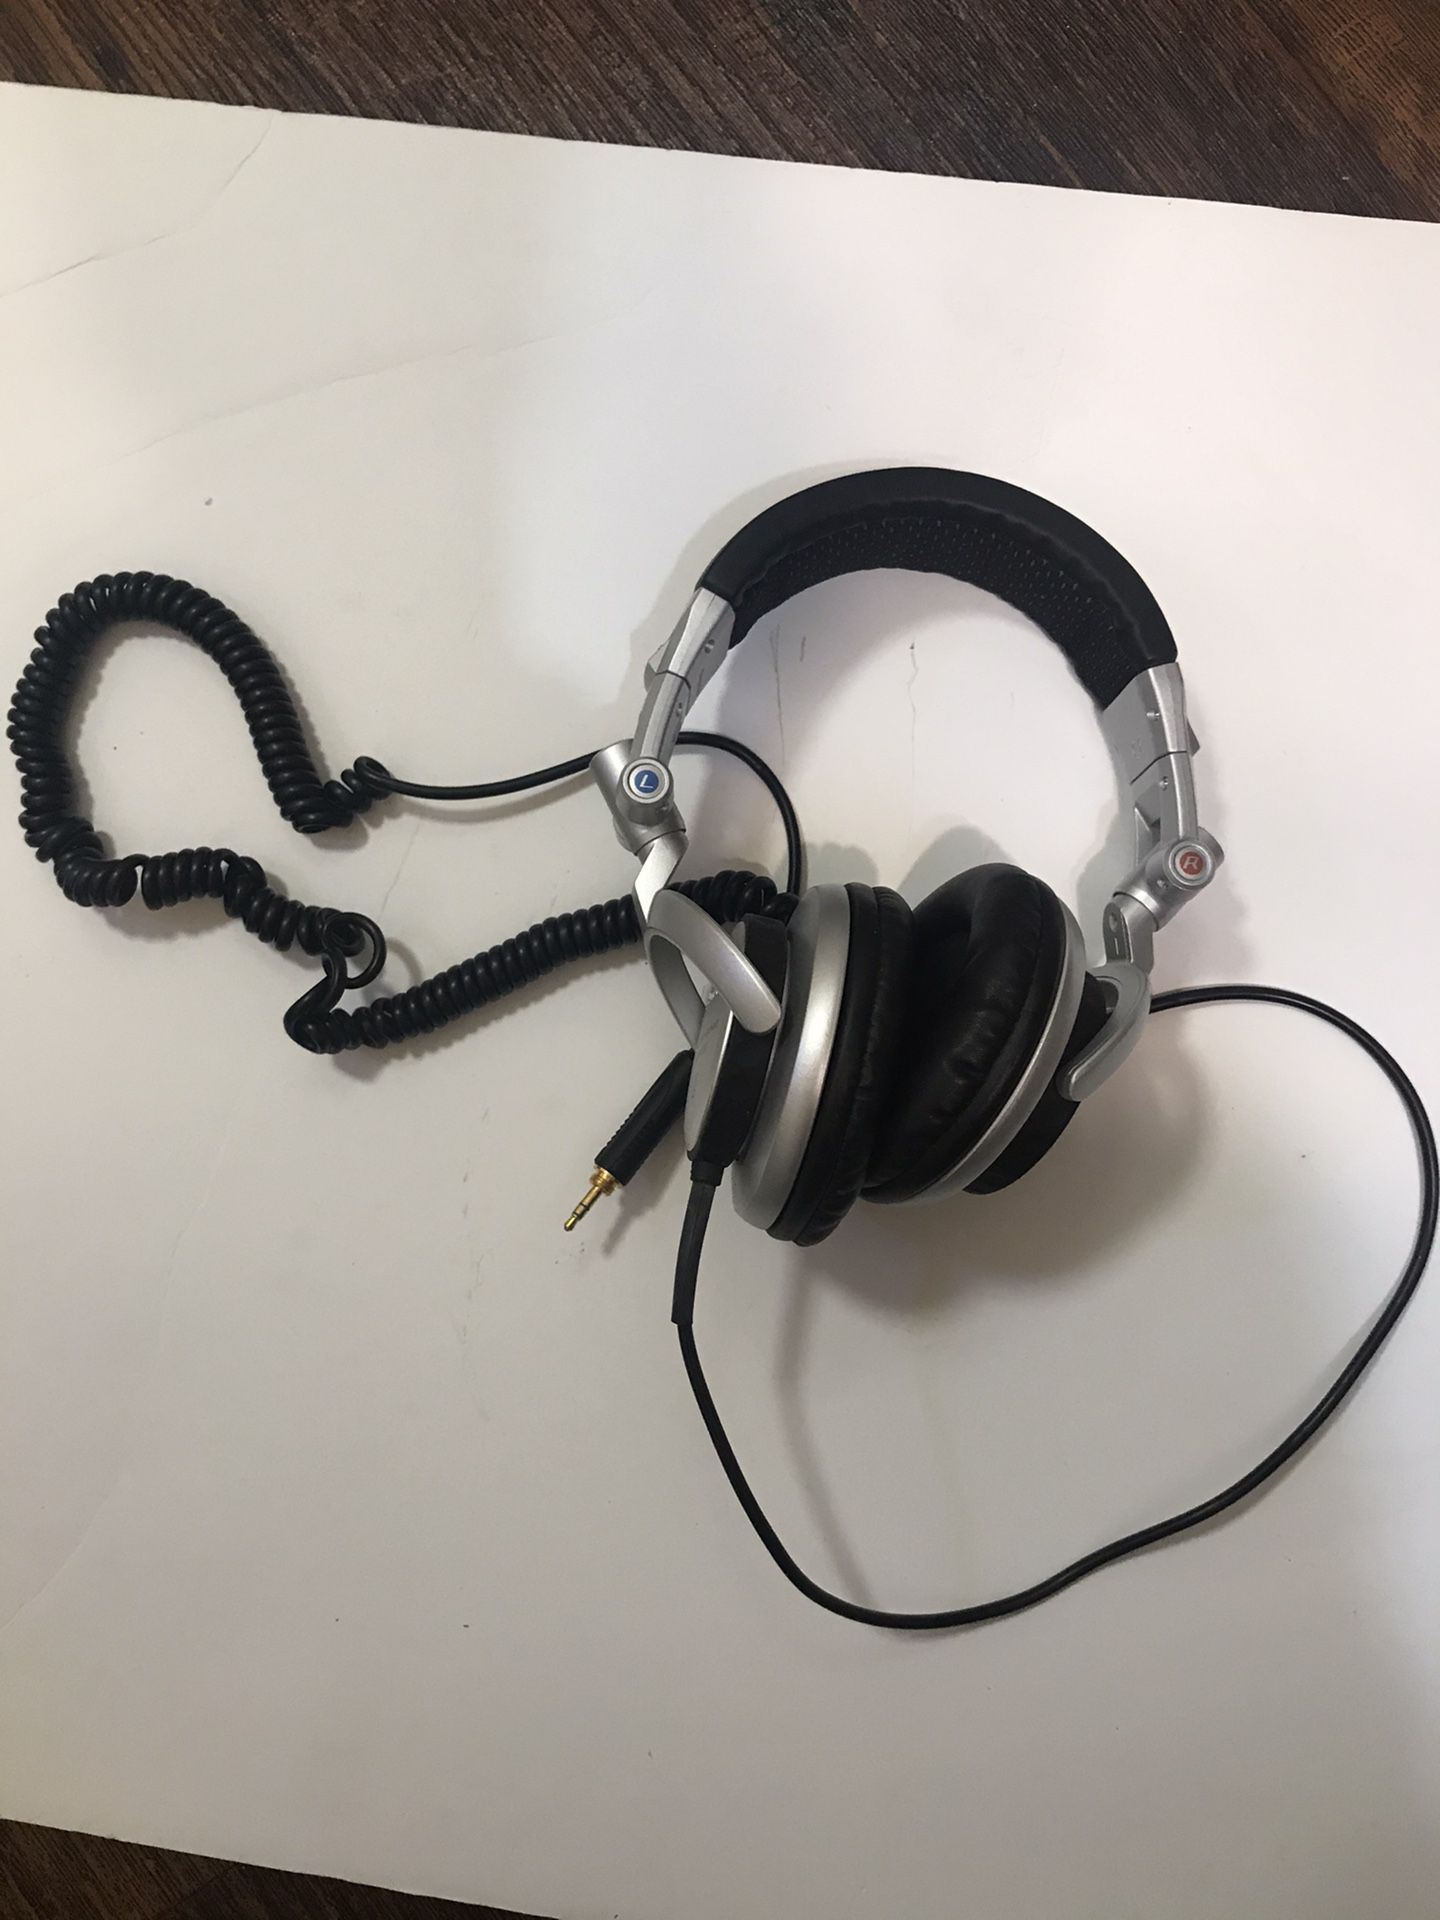 SONY MDR-V700 DJ Remix Use Digital Stereo Headphones Good Condition